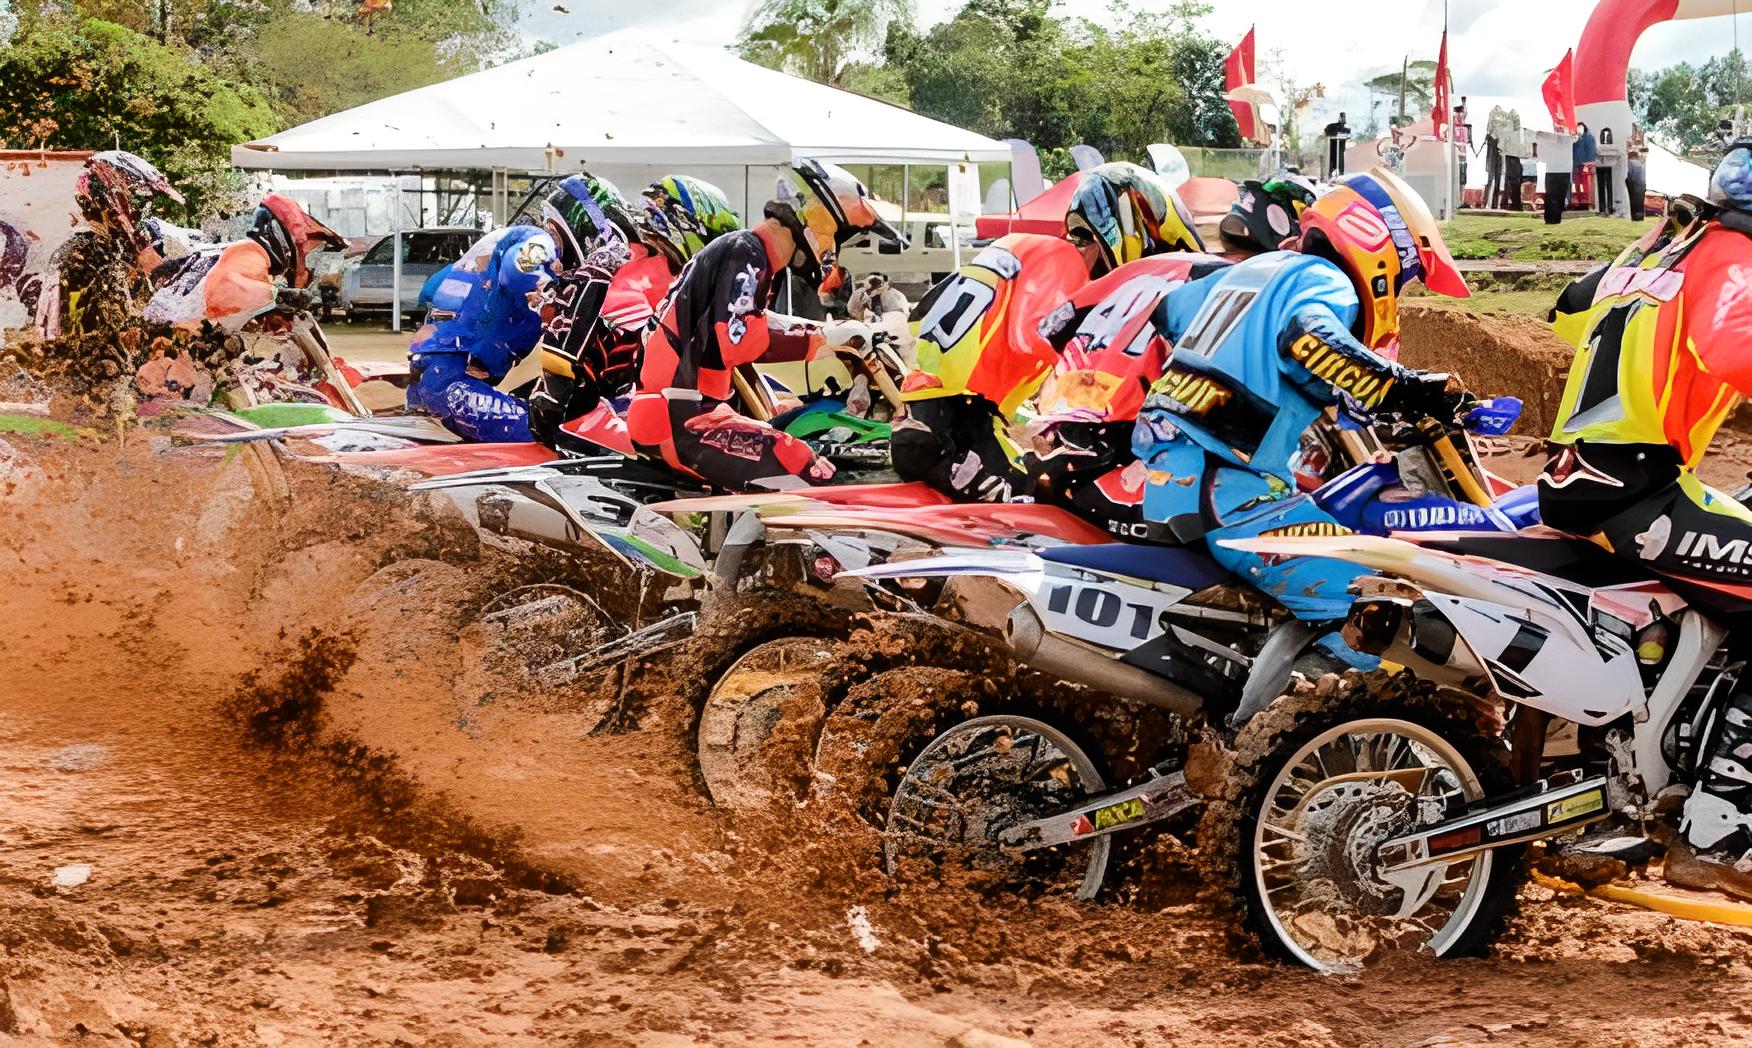 Comemorando 124 anos, Campo Grande recebe mais de 600 pilotos no Campeonato  Brasileiro de Motocross – FUNDESPORTE